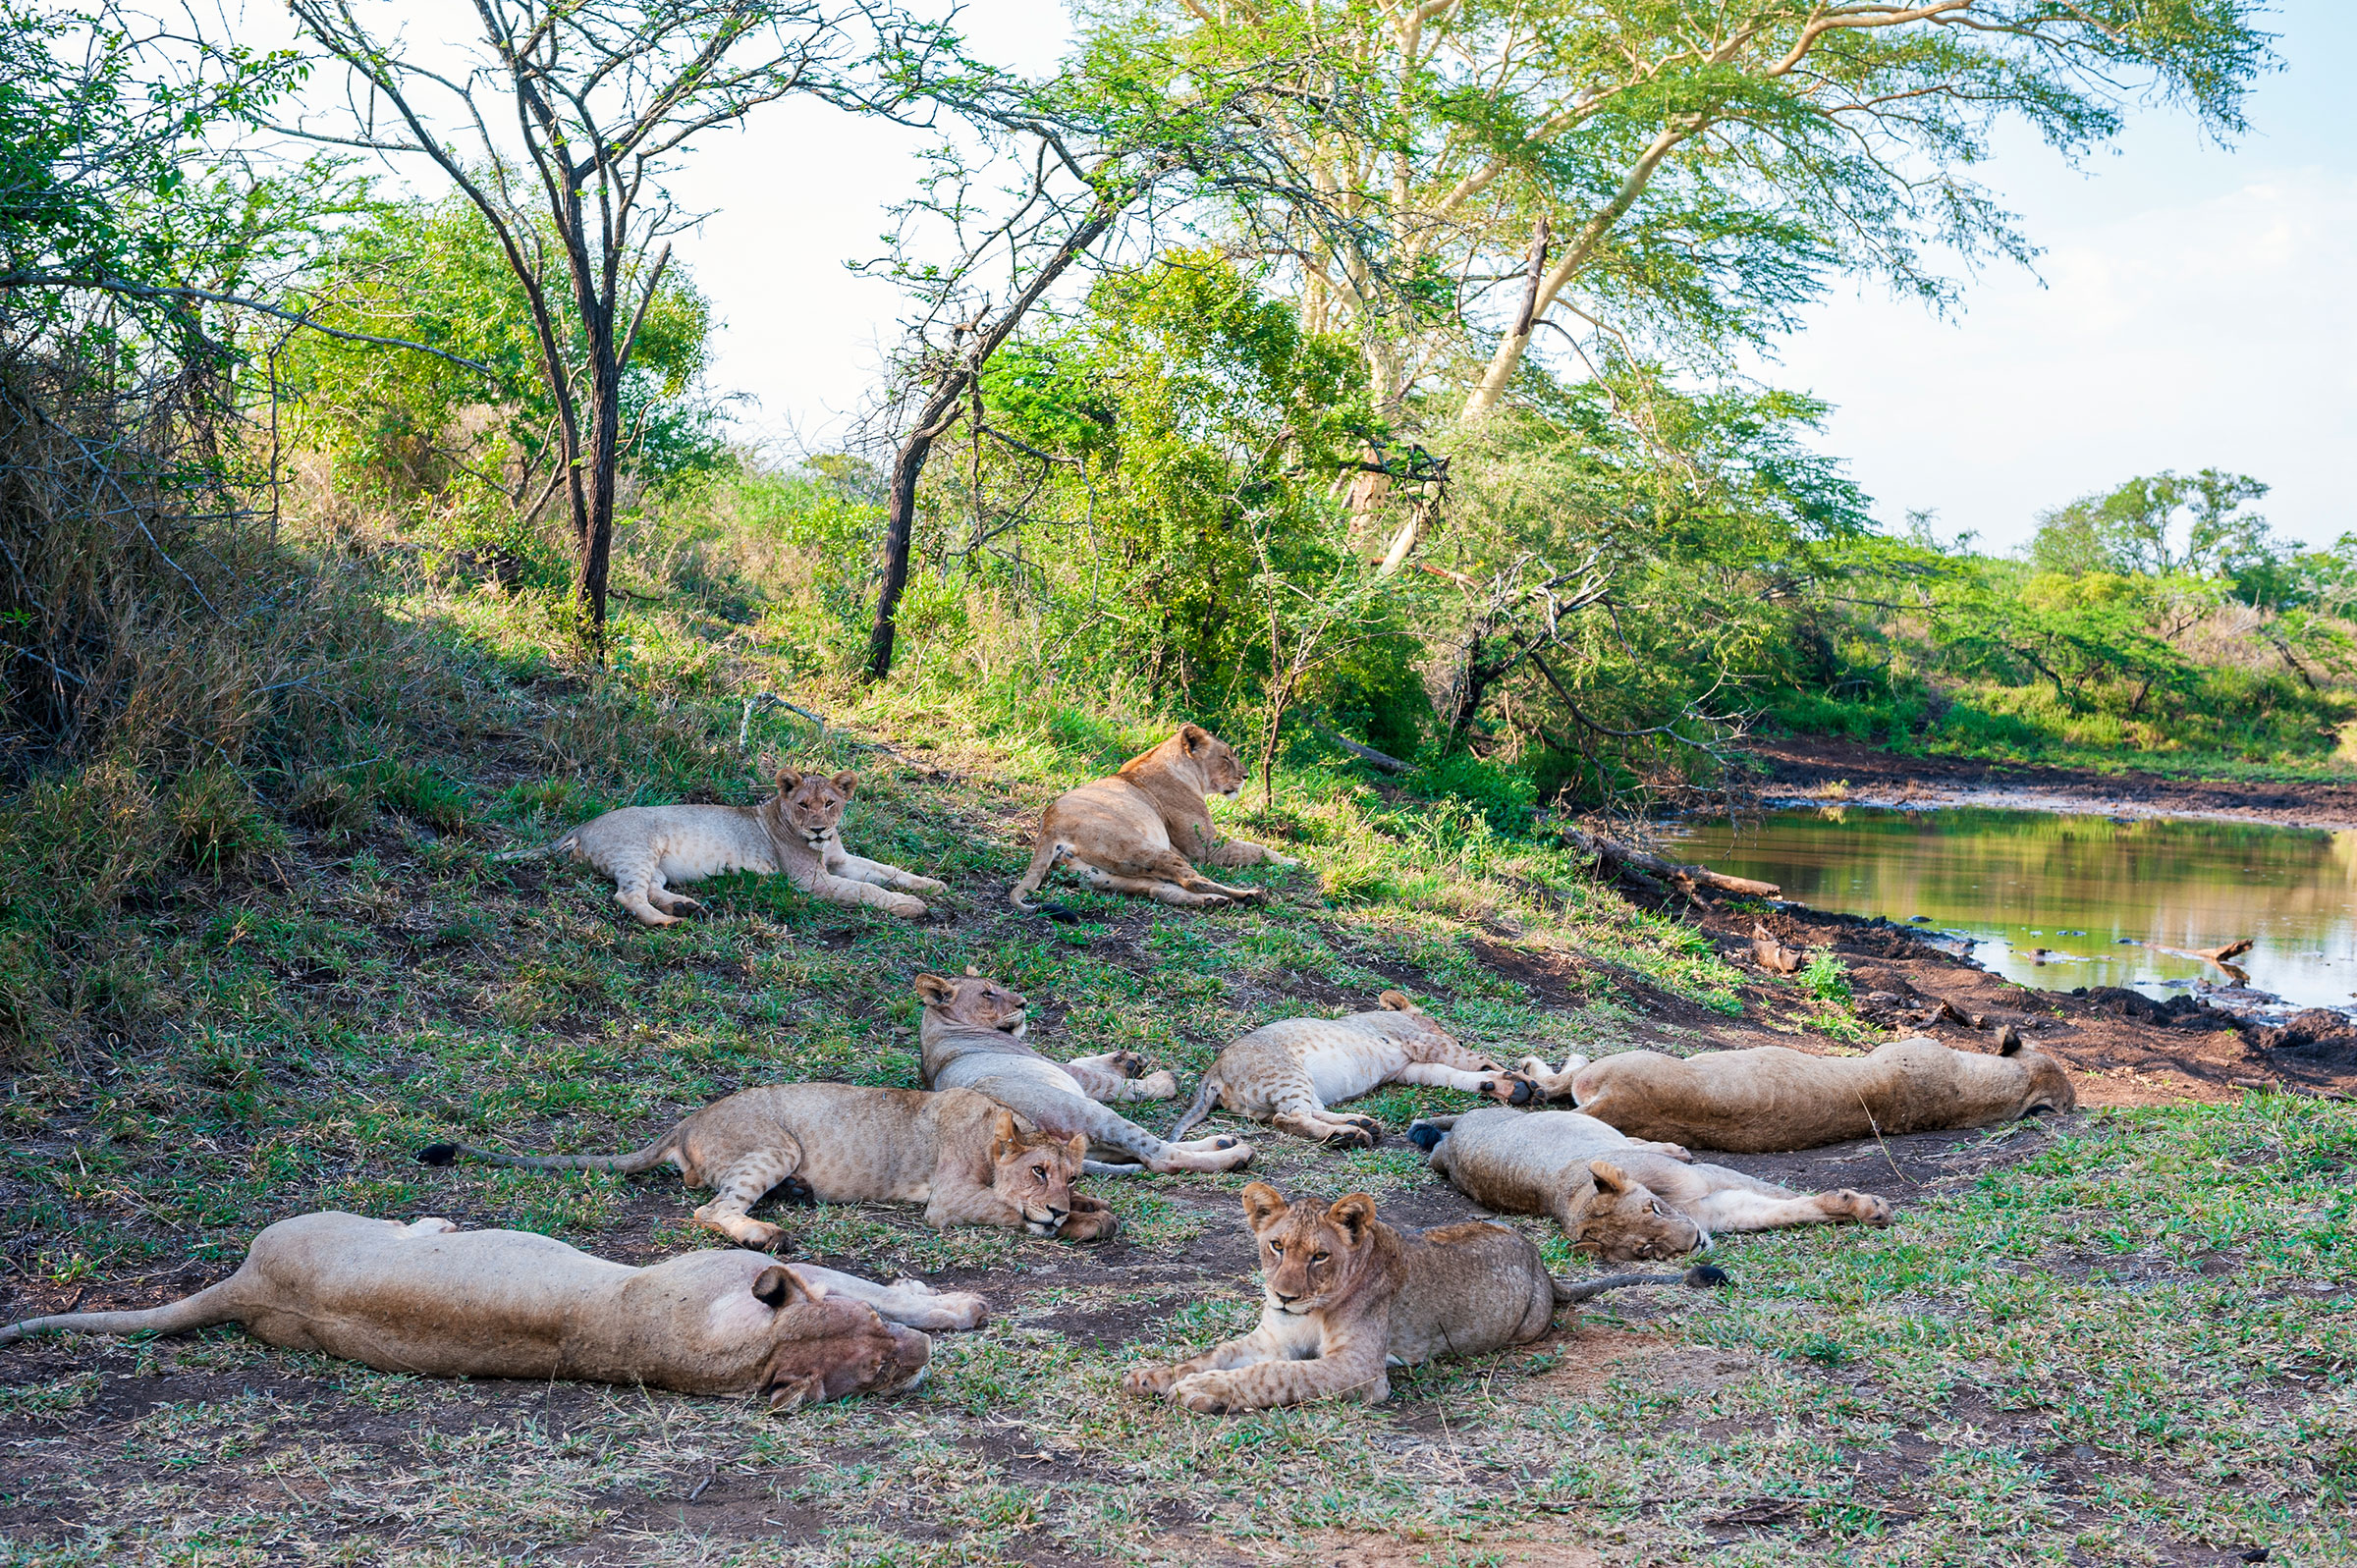 A pride of lions at Thanda Safari Lodge, a 14 000-hectare